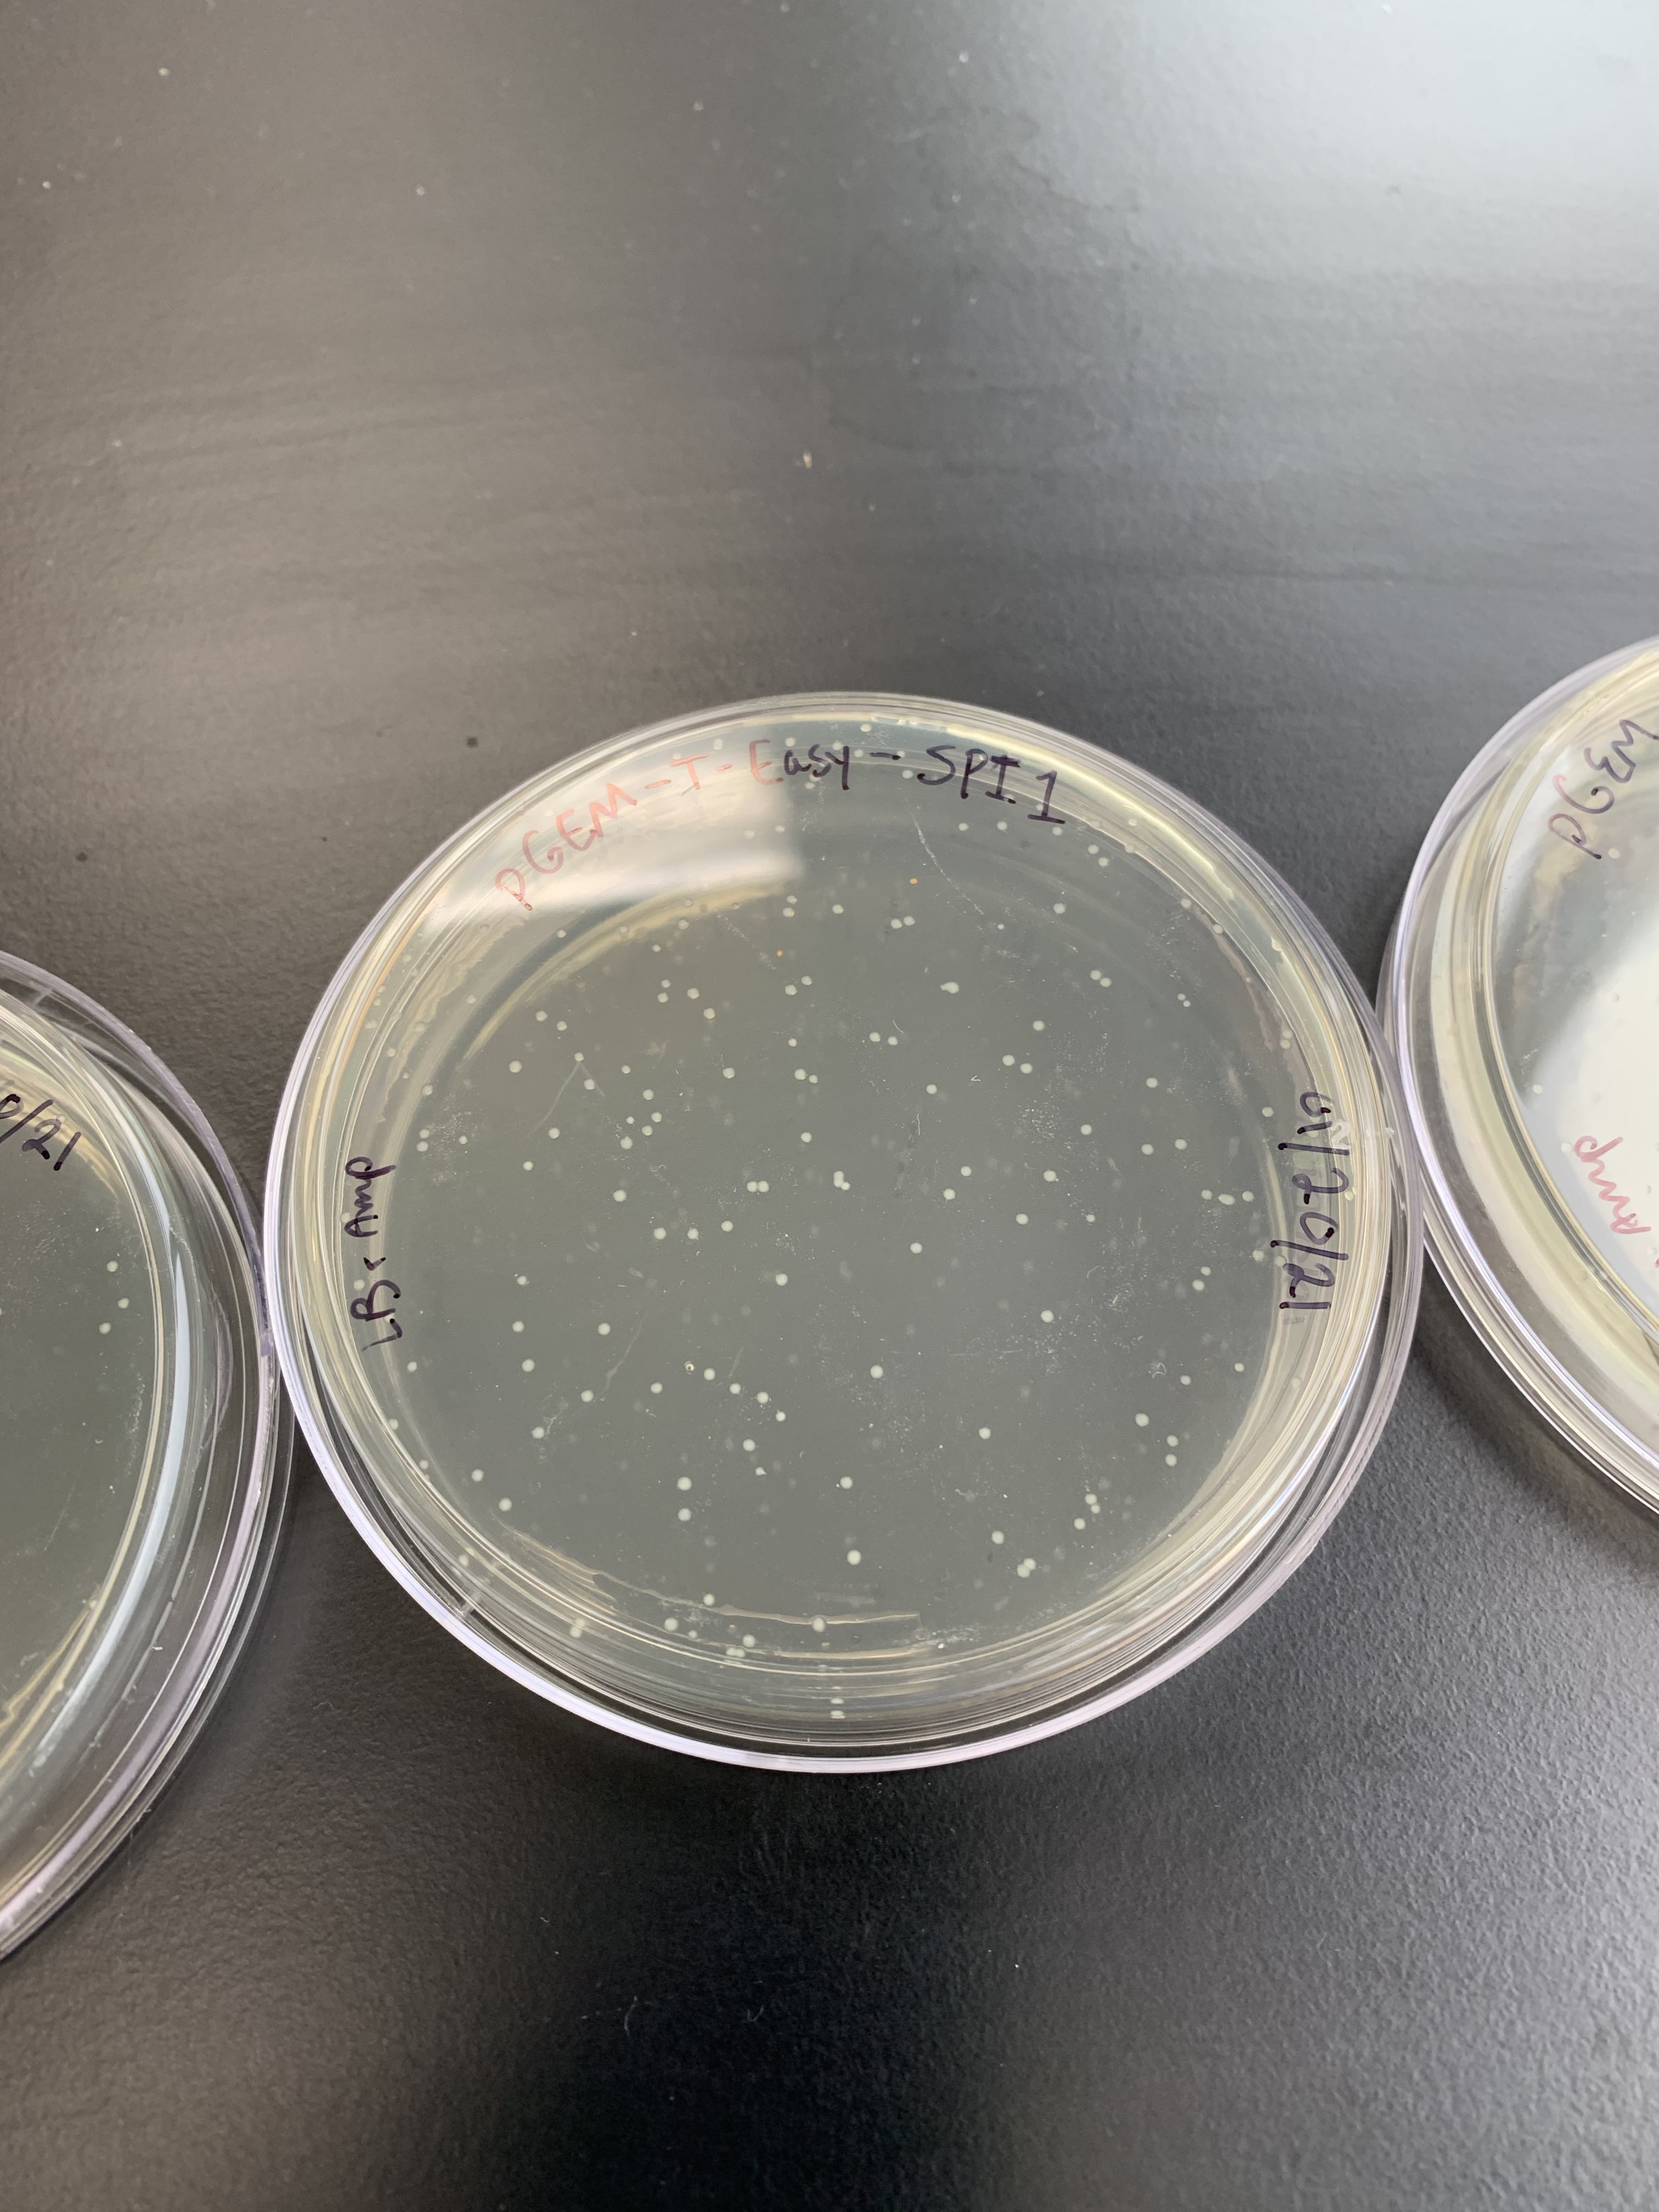 bacterial clones